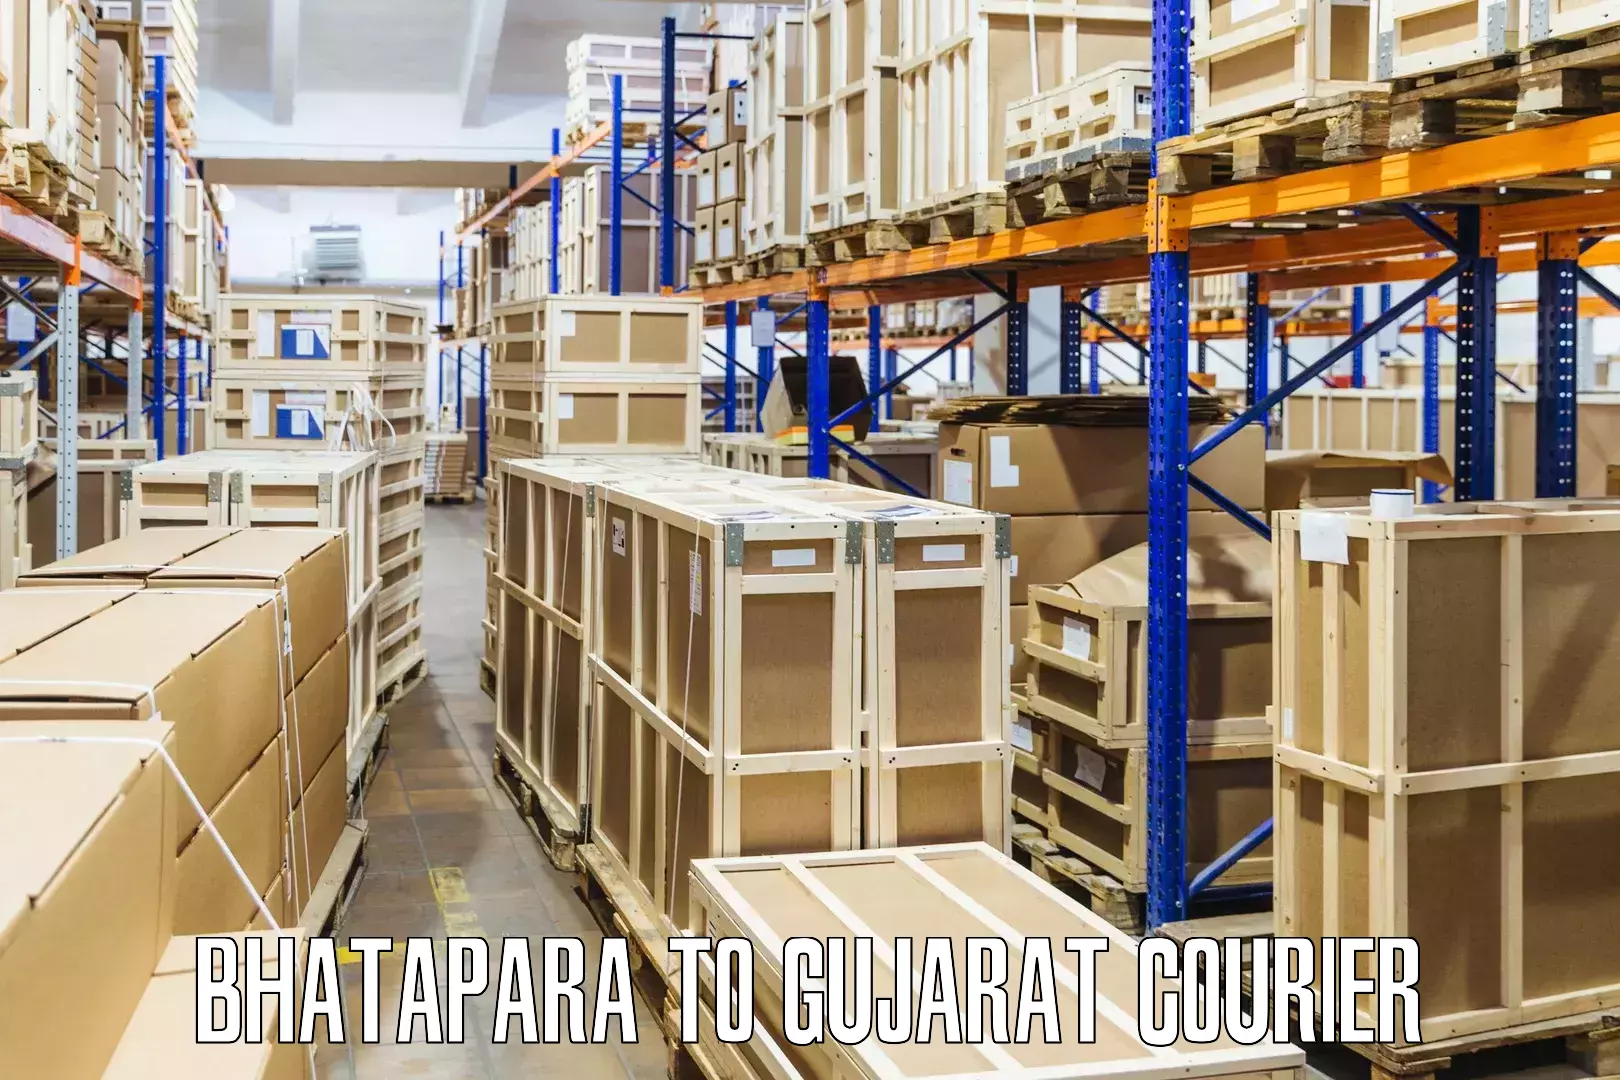 User-friendly delivery service Bhatapara to Dholera